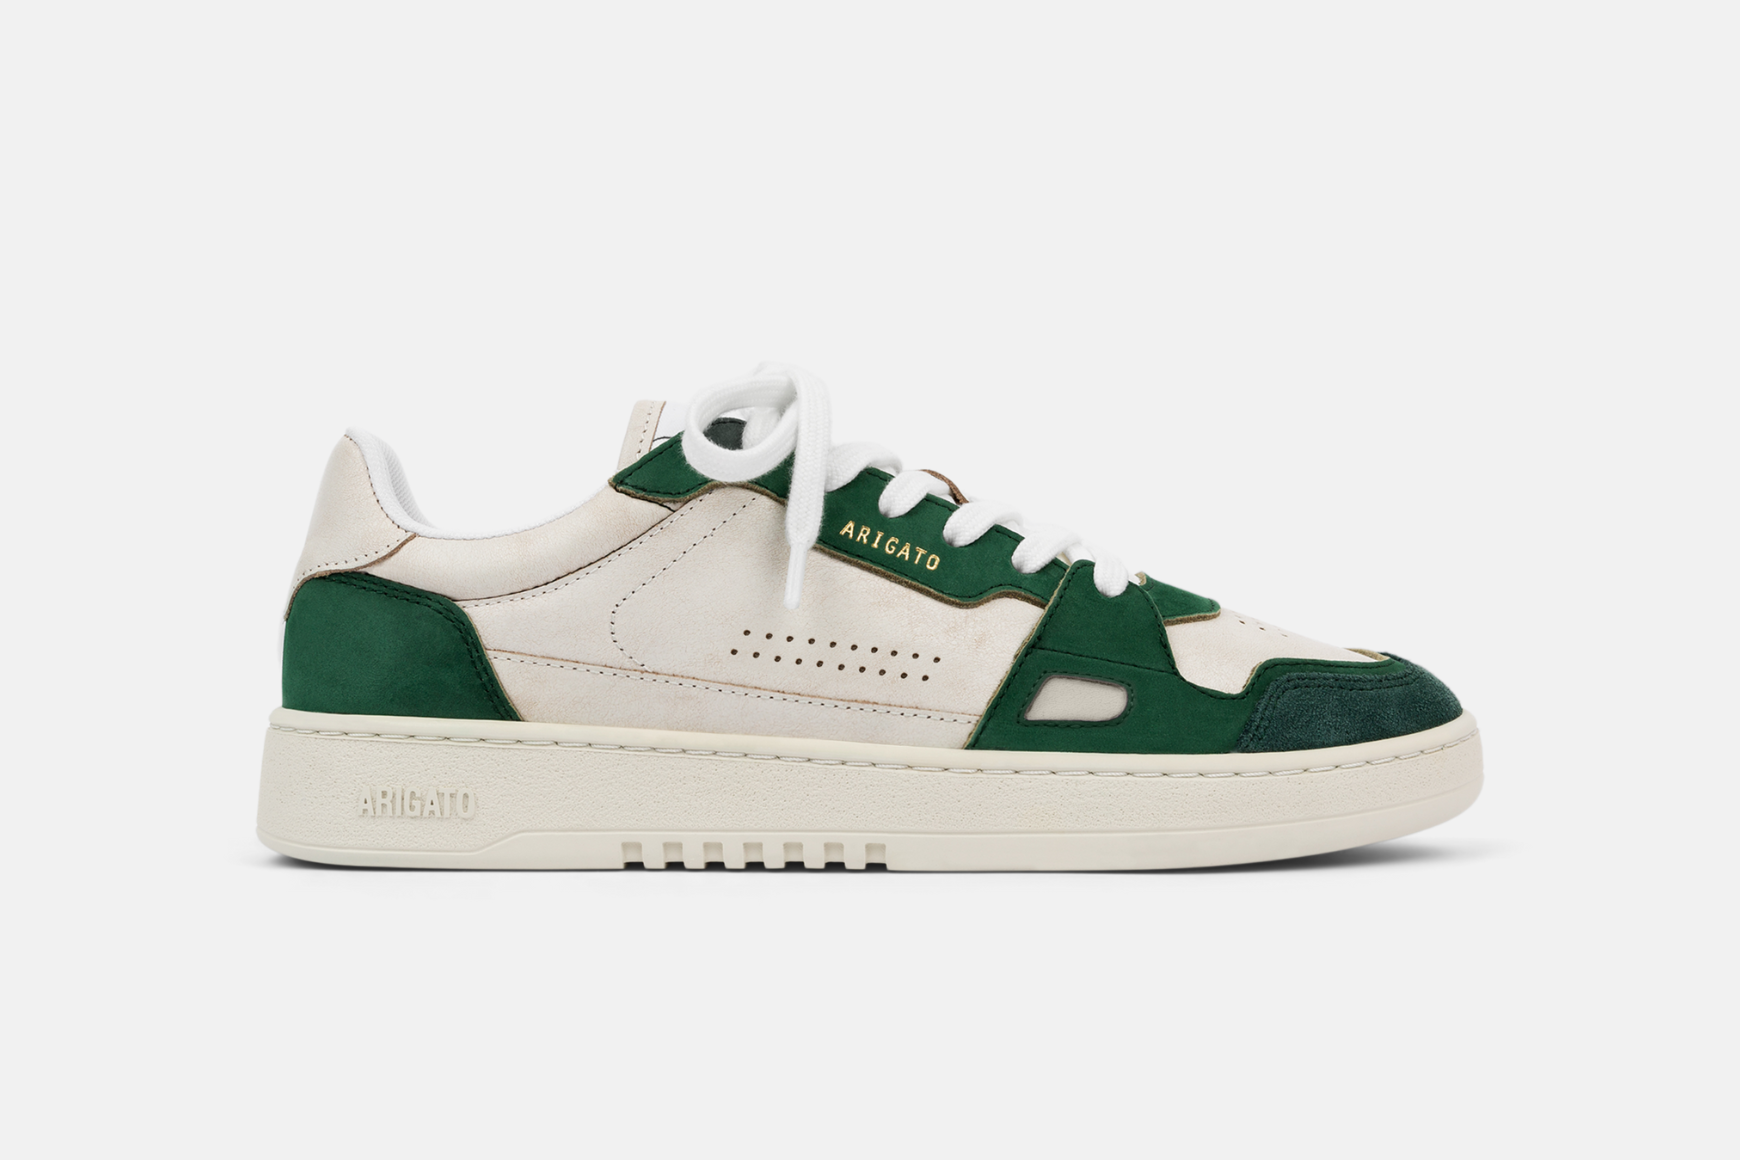 A single Axel Arigato Dice Lo sneaker in a white and green colourway